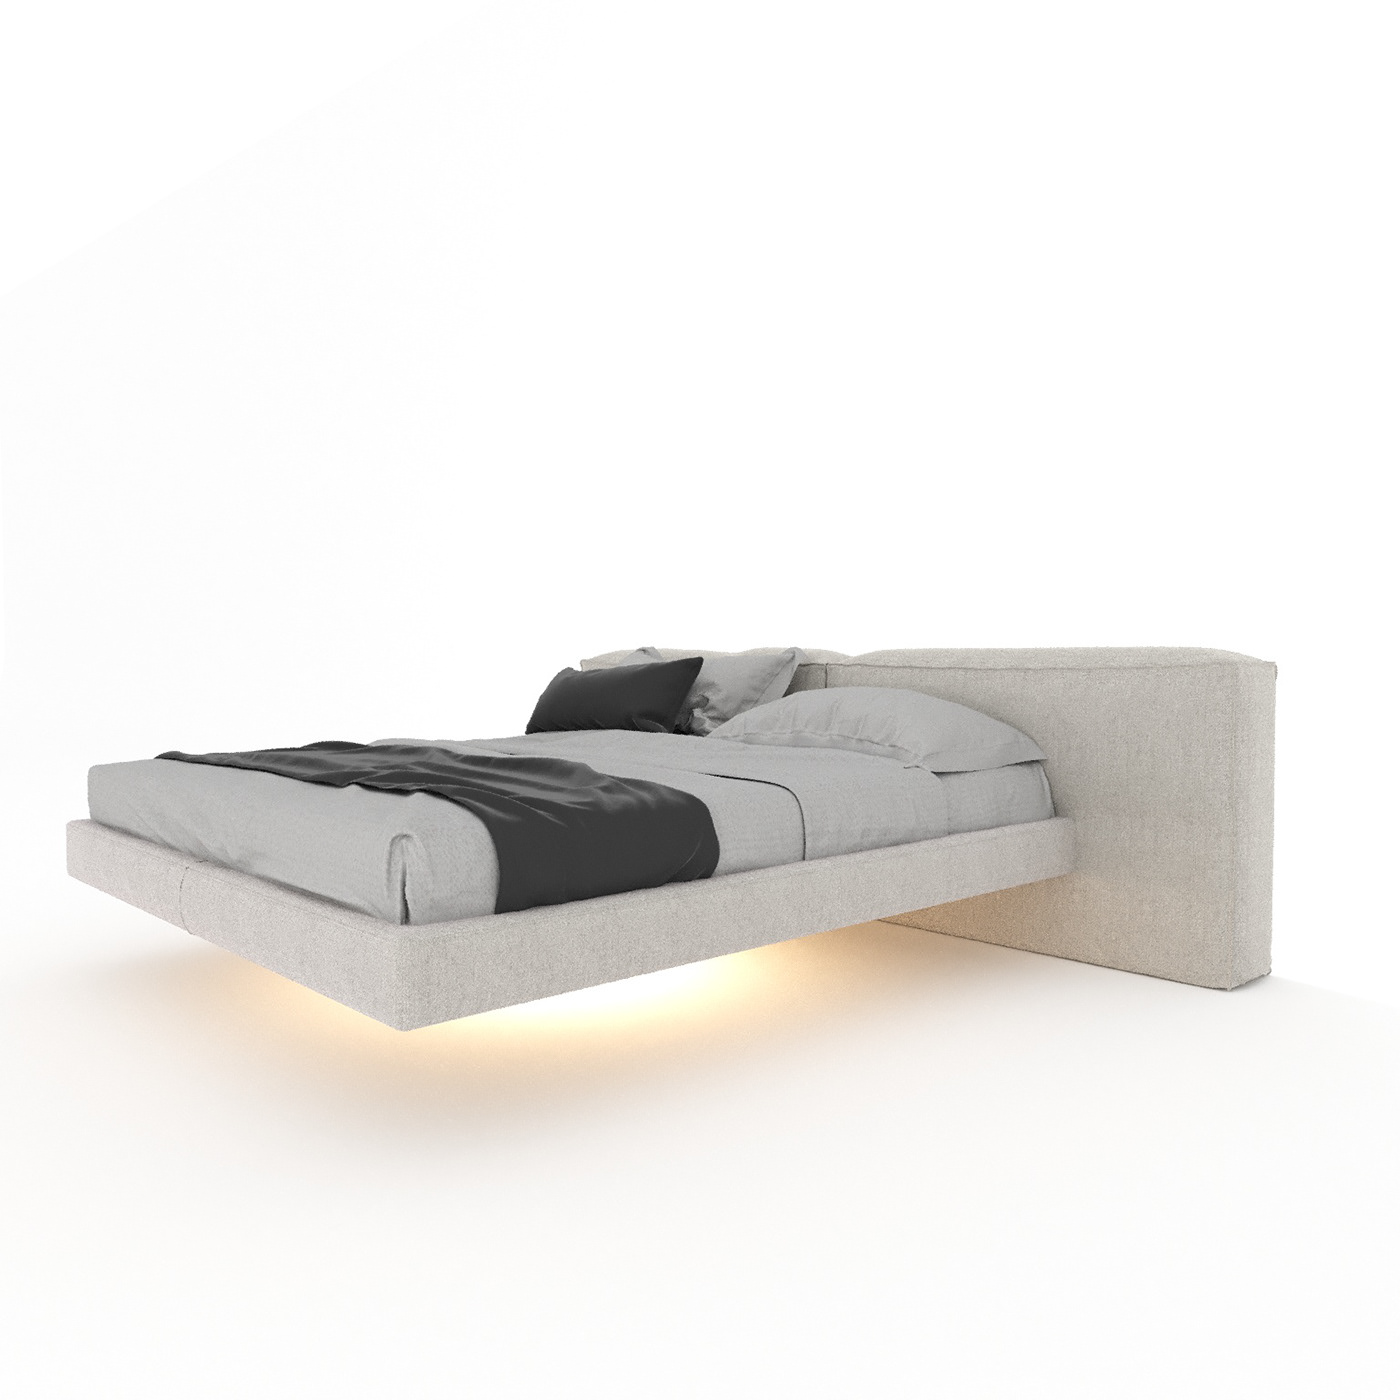 bed bedroom Berezhniak david Minimalism bedroom design object design abed buddhabed fly bed